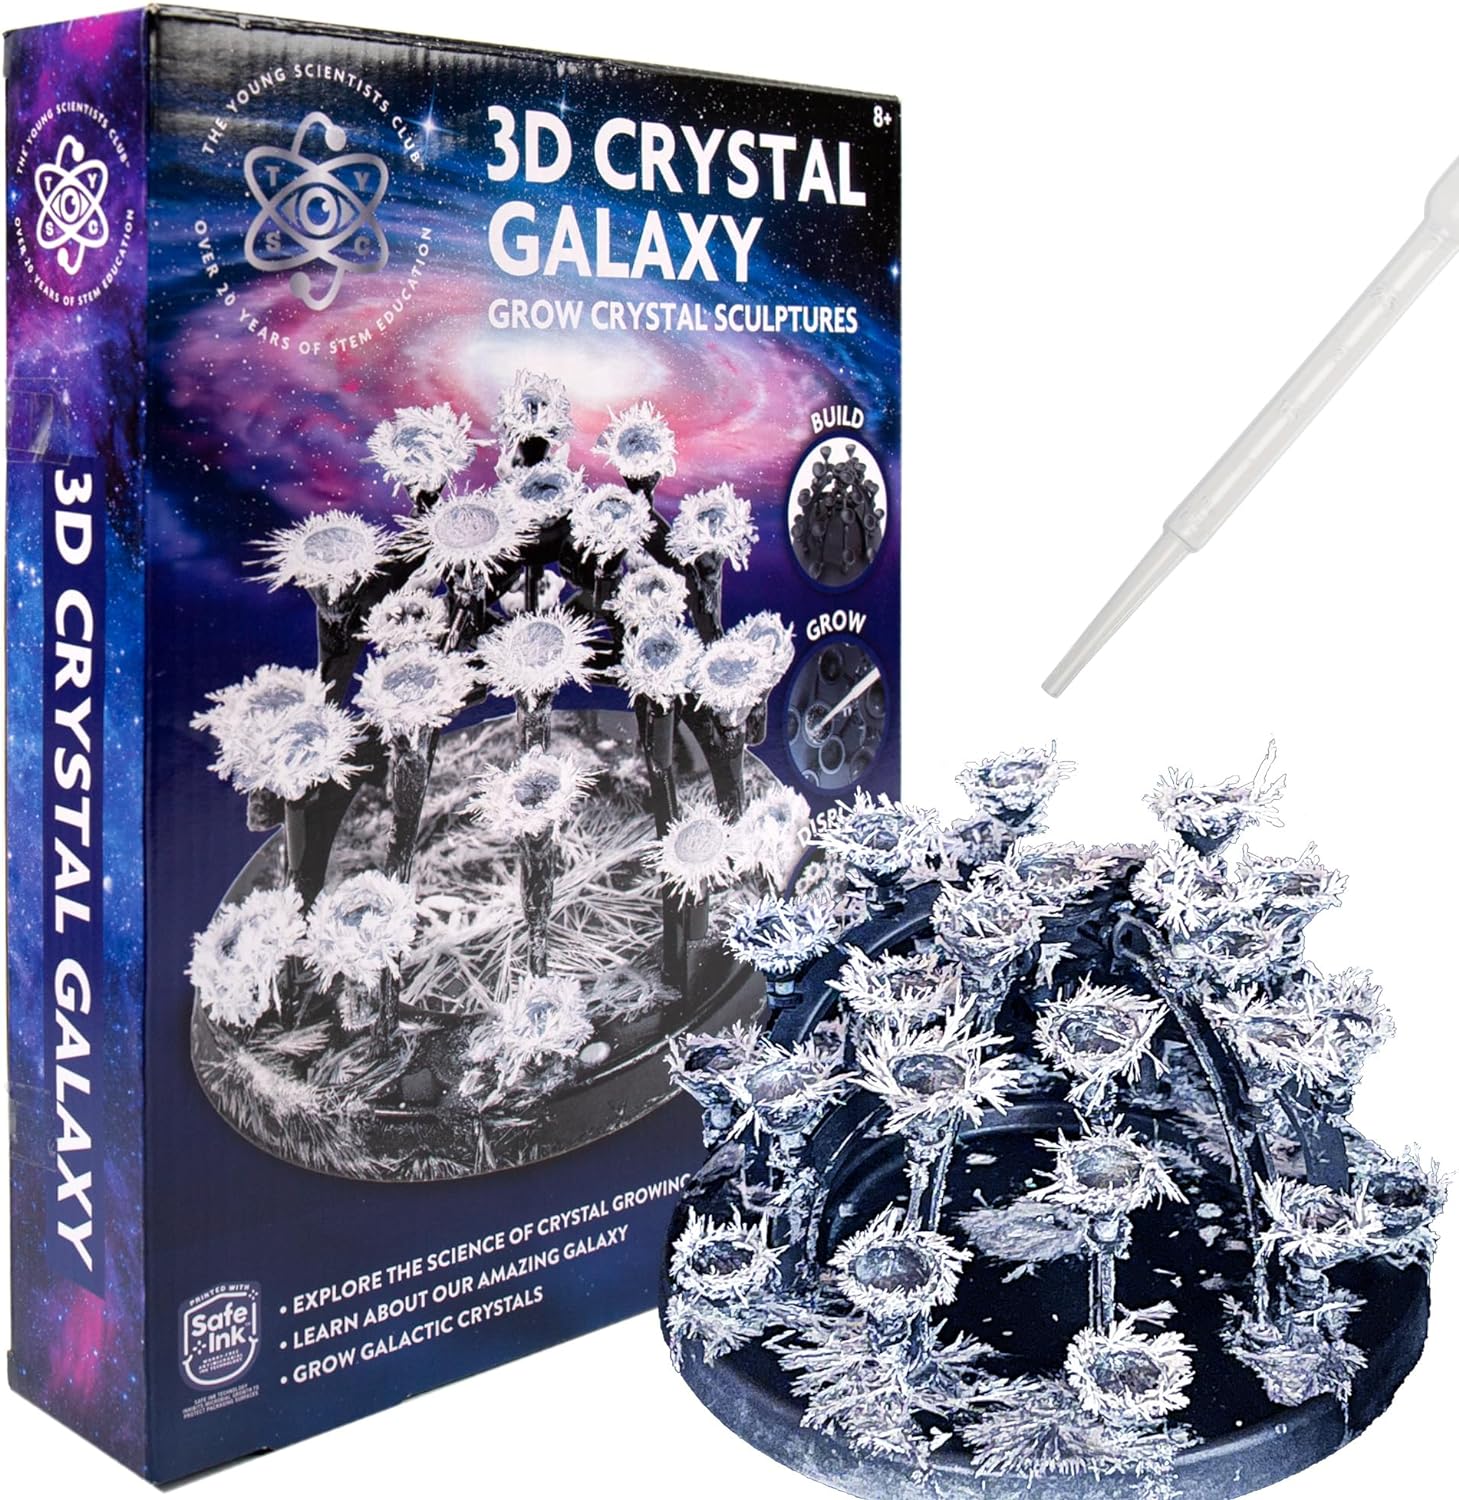 3D Crystal Galaxy